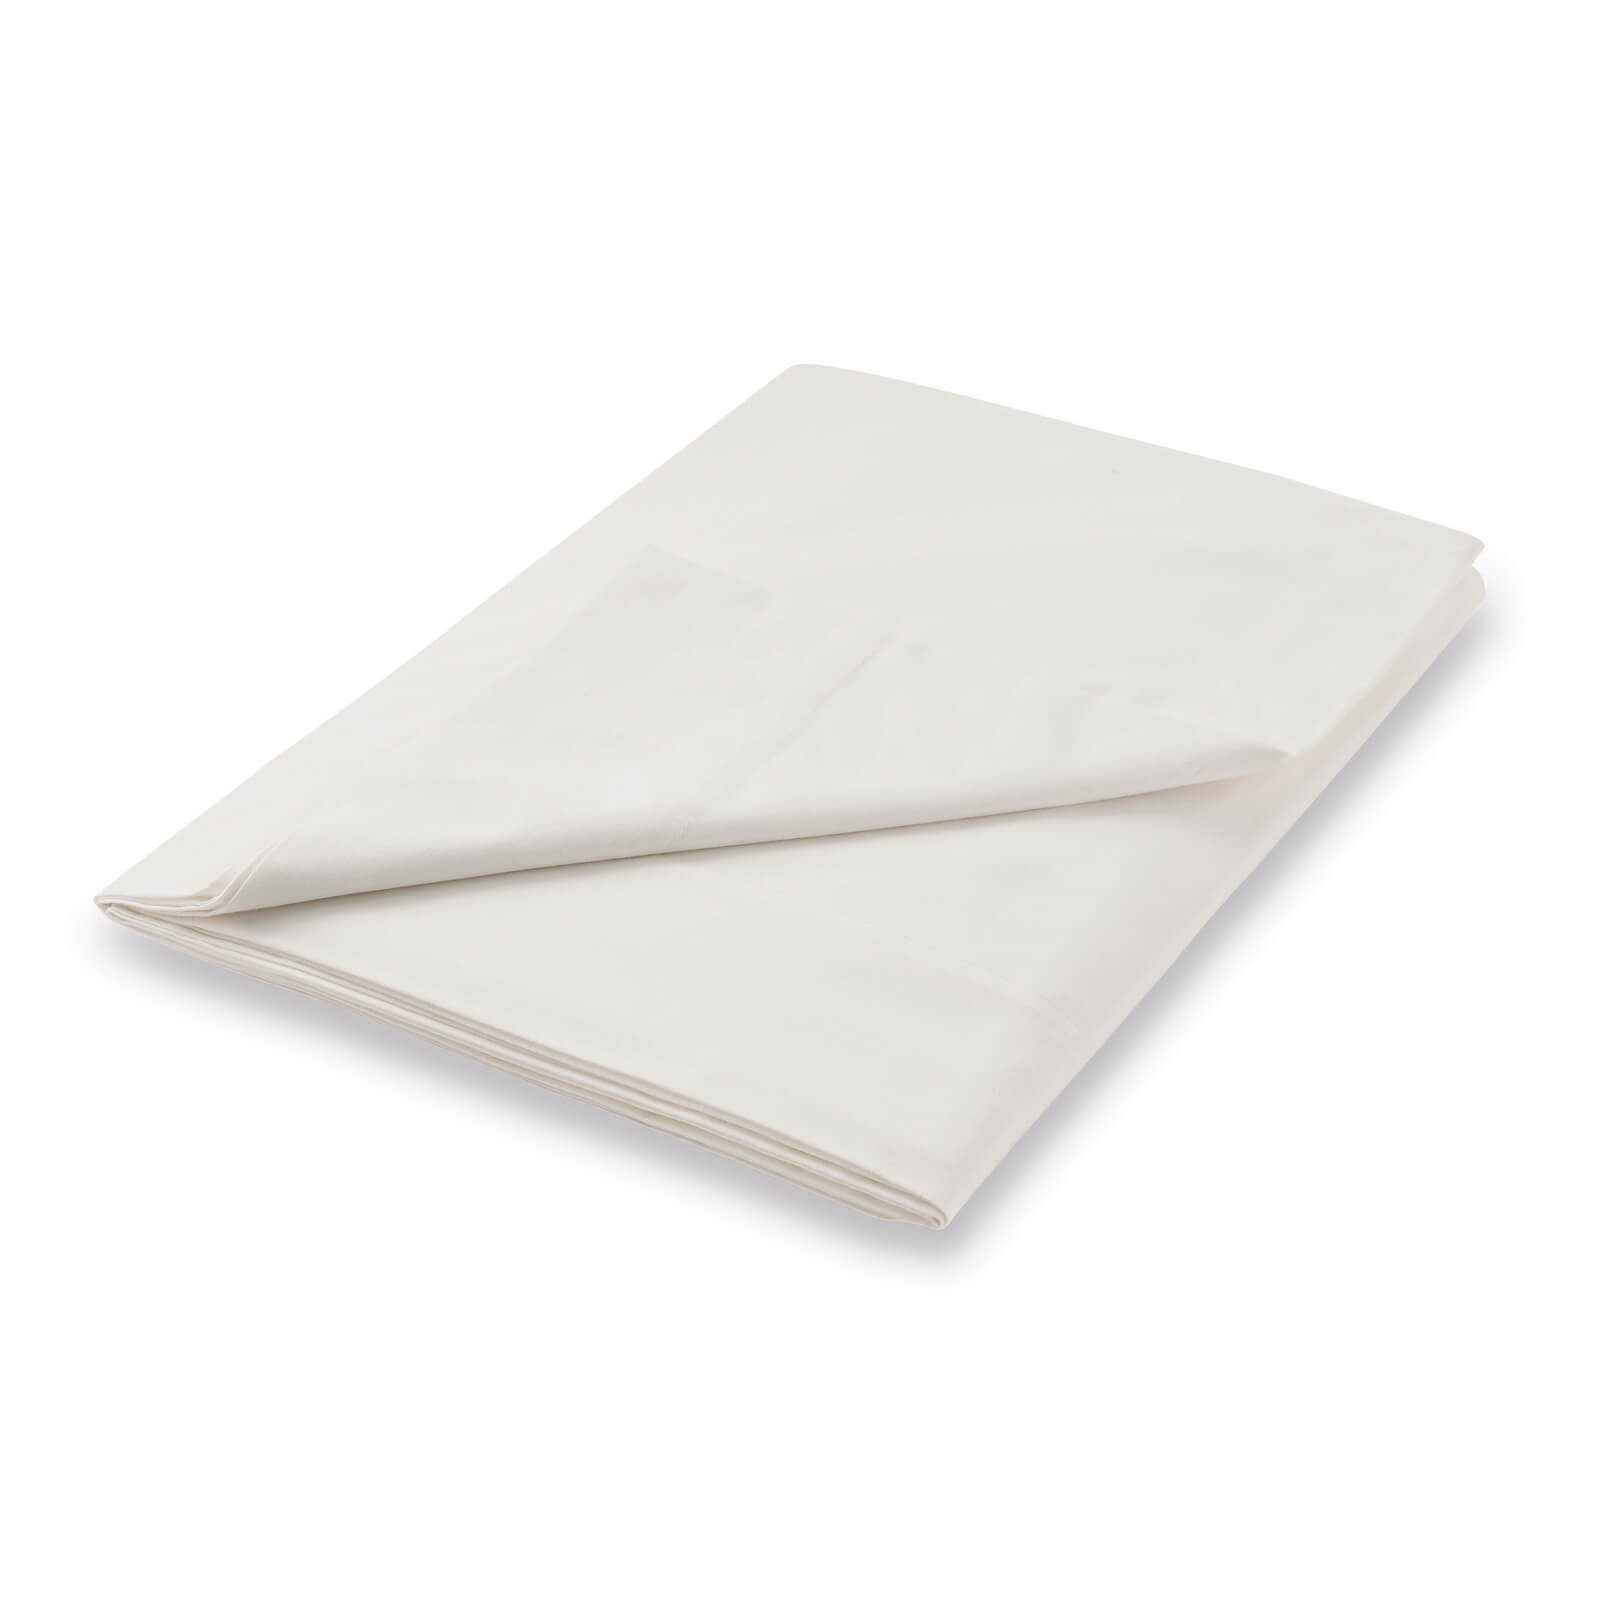 Flat King Sized Sheet - Parchment